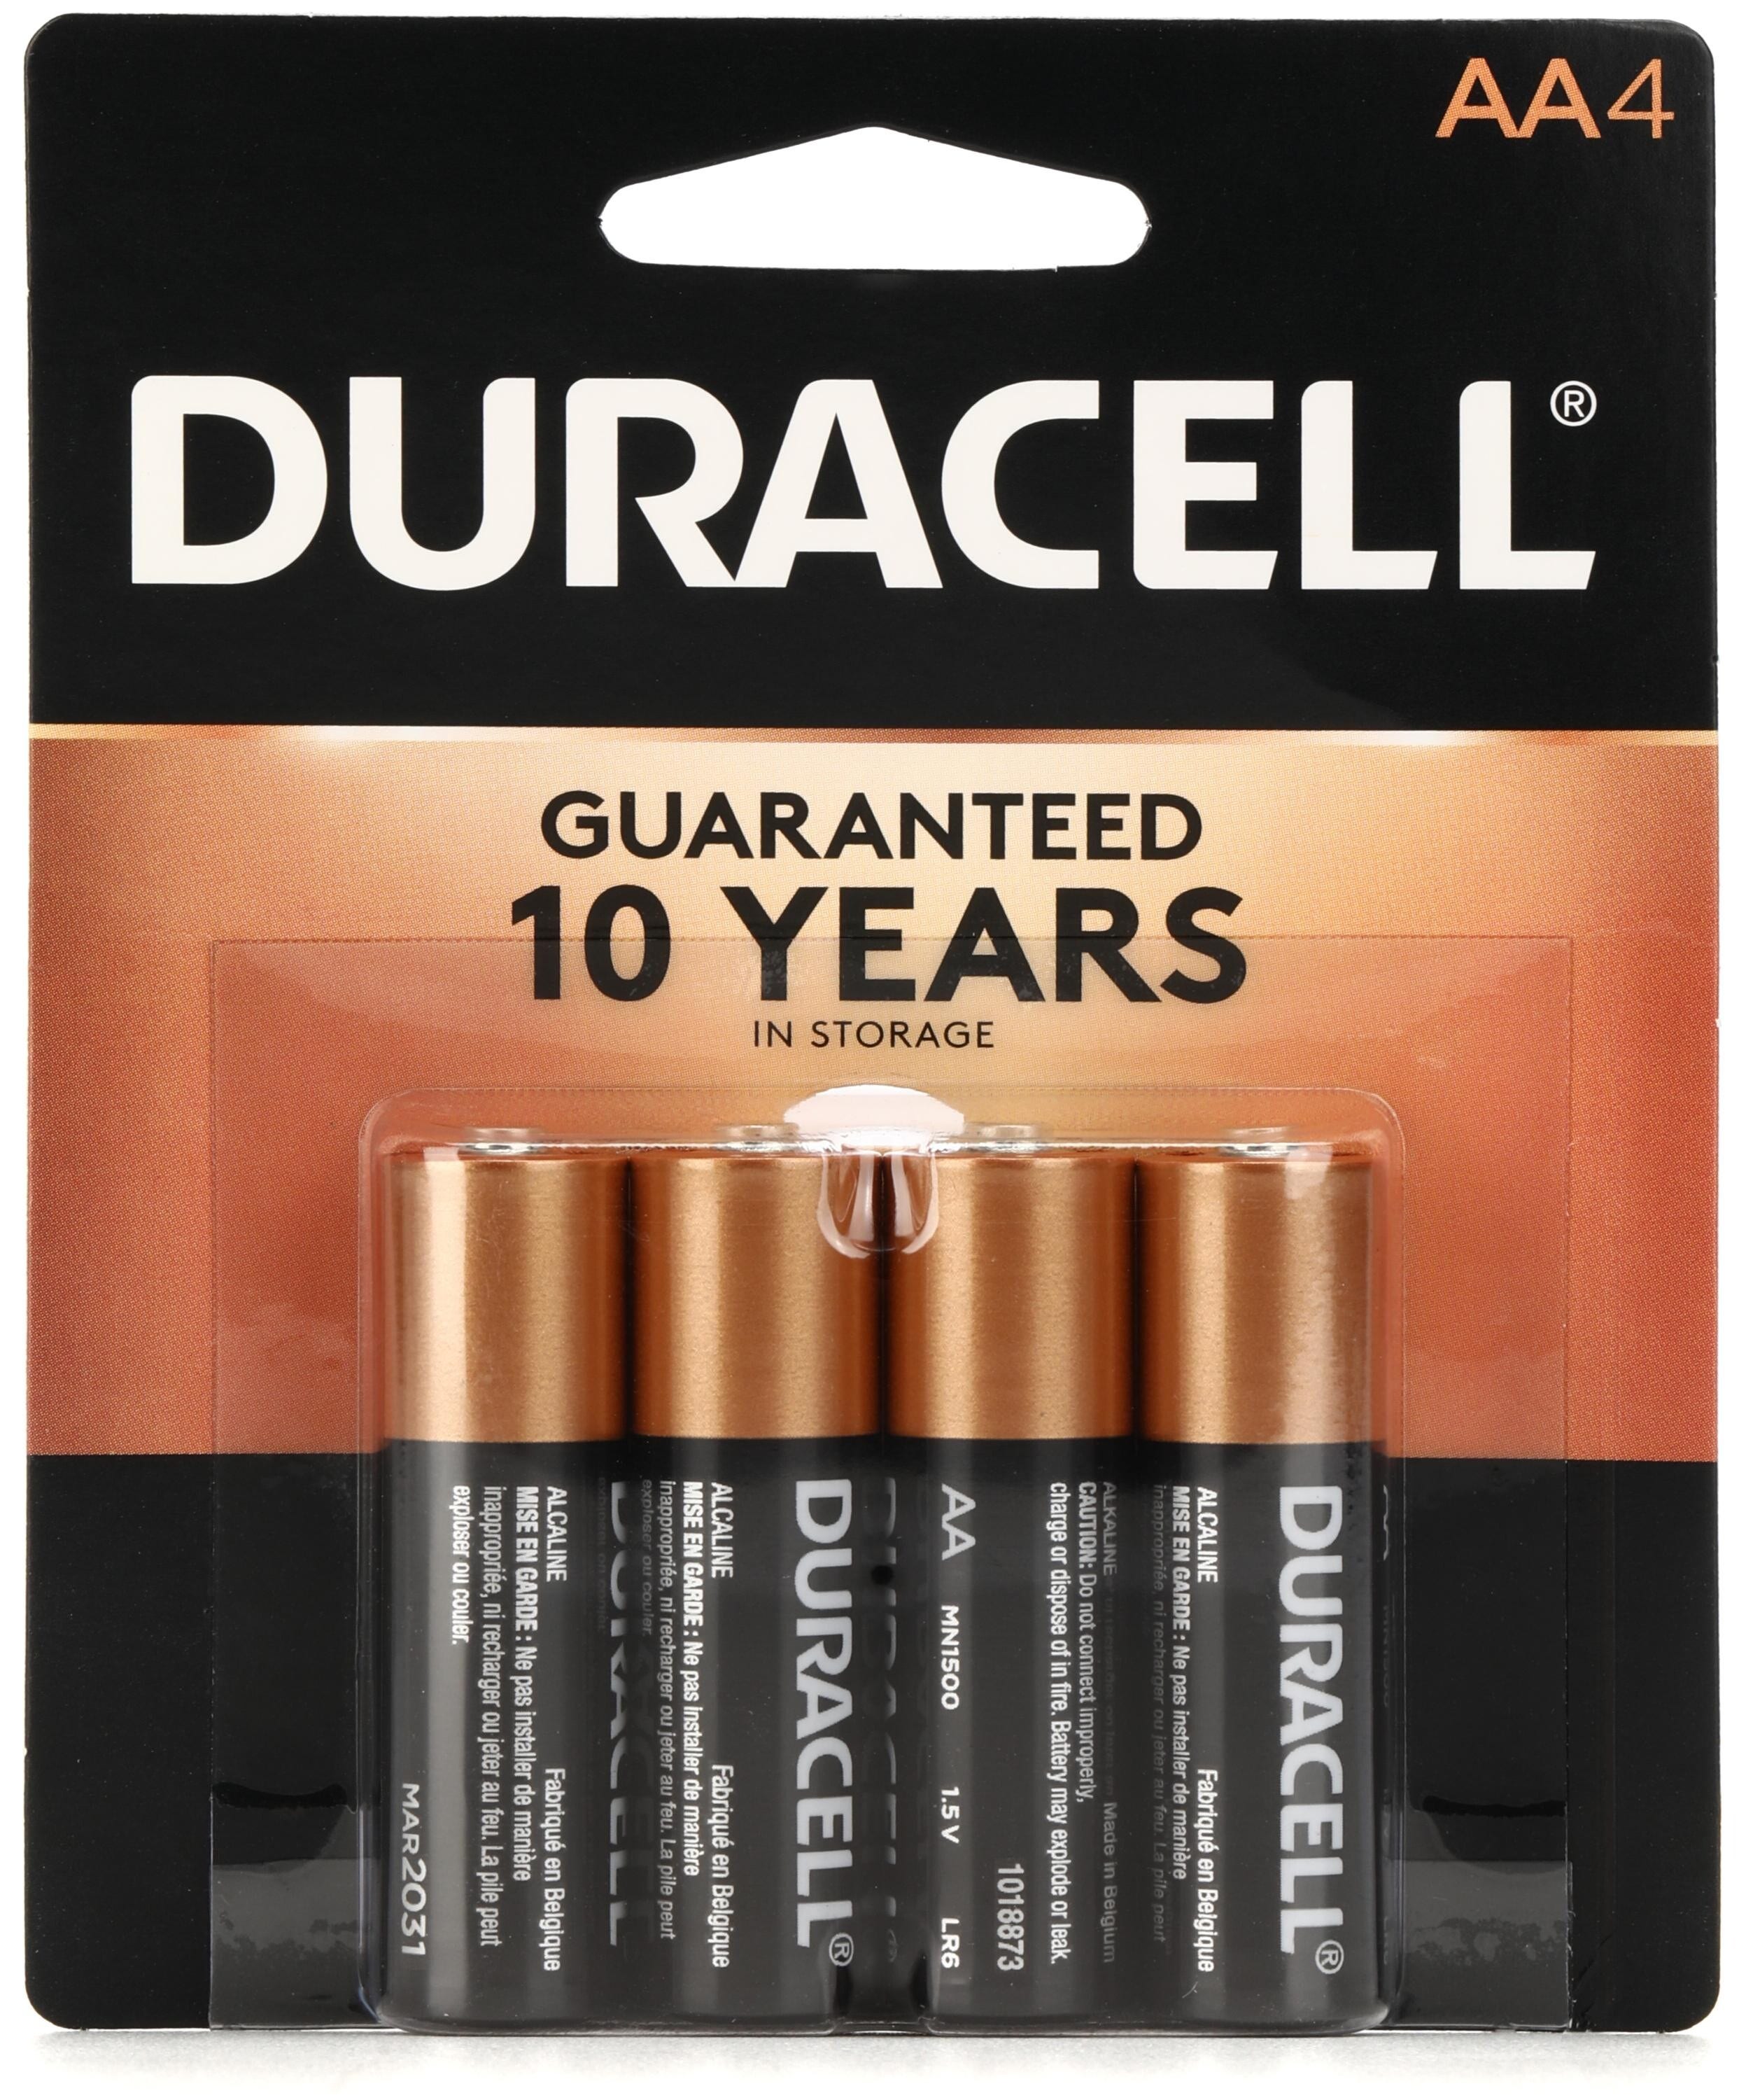 Duracell Coppertop AA Alkaline Battery (4-pack)